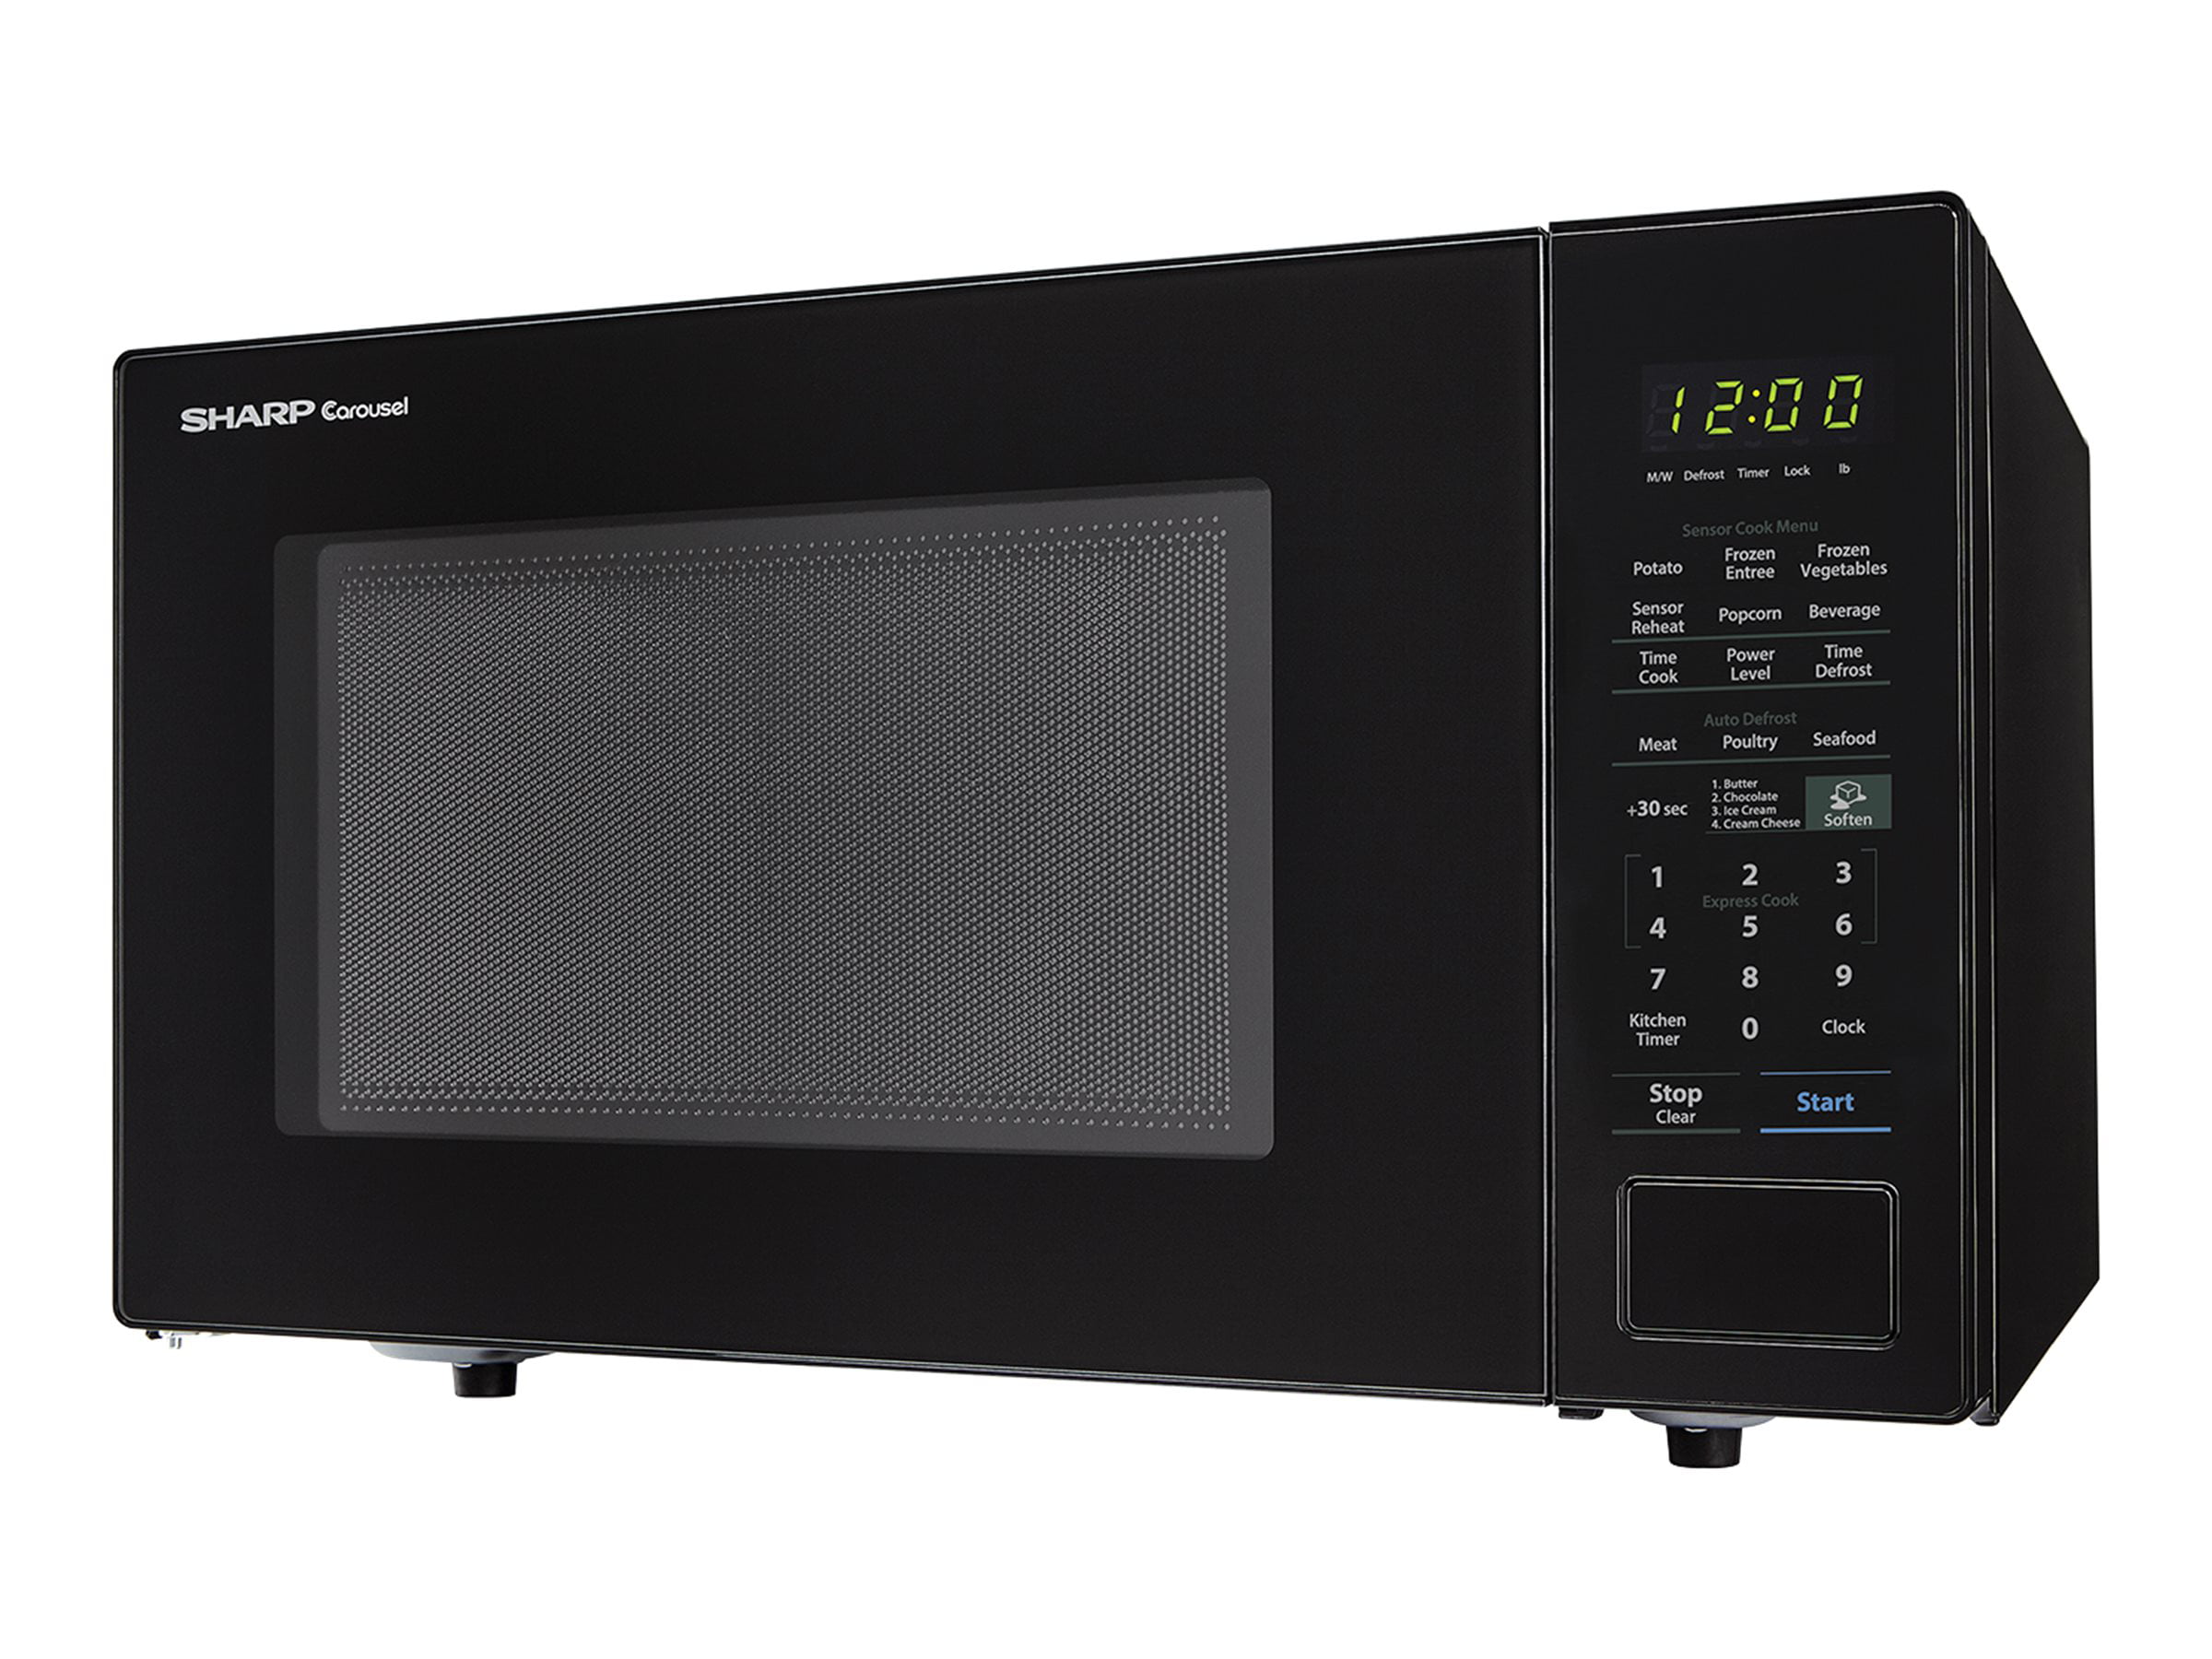 Sharp Carousel SMC1441CB - Microwave oven - freestanding - 1.4 cu. ft